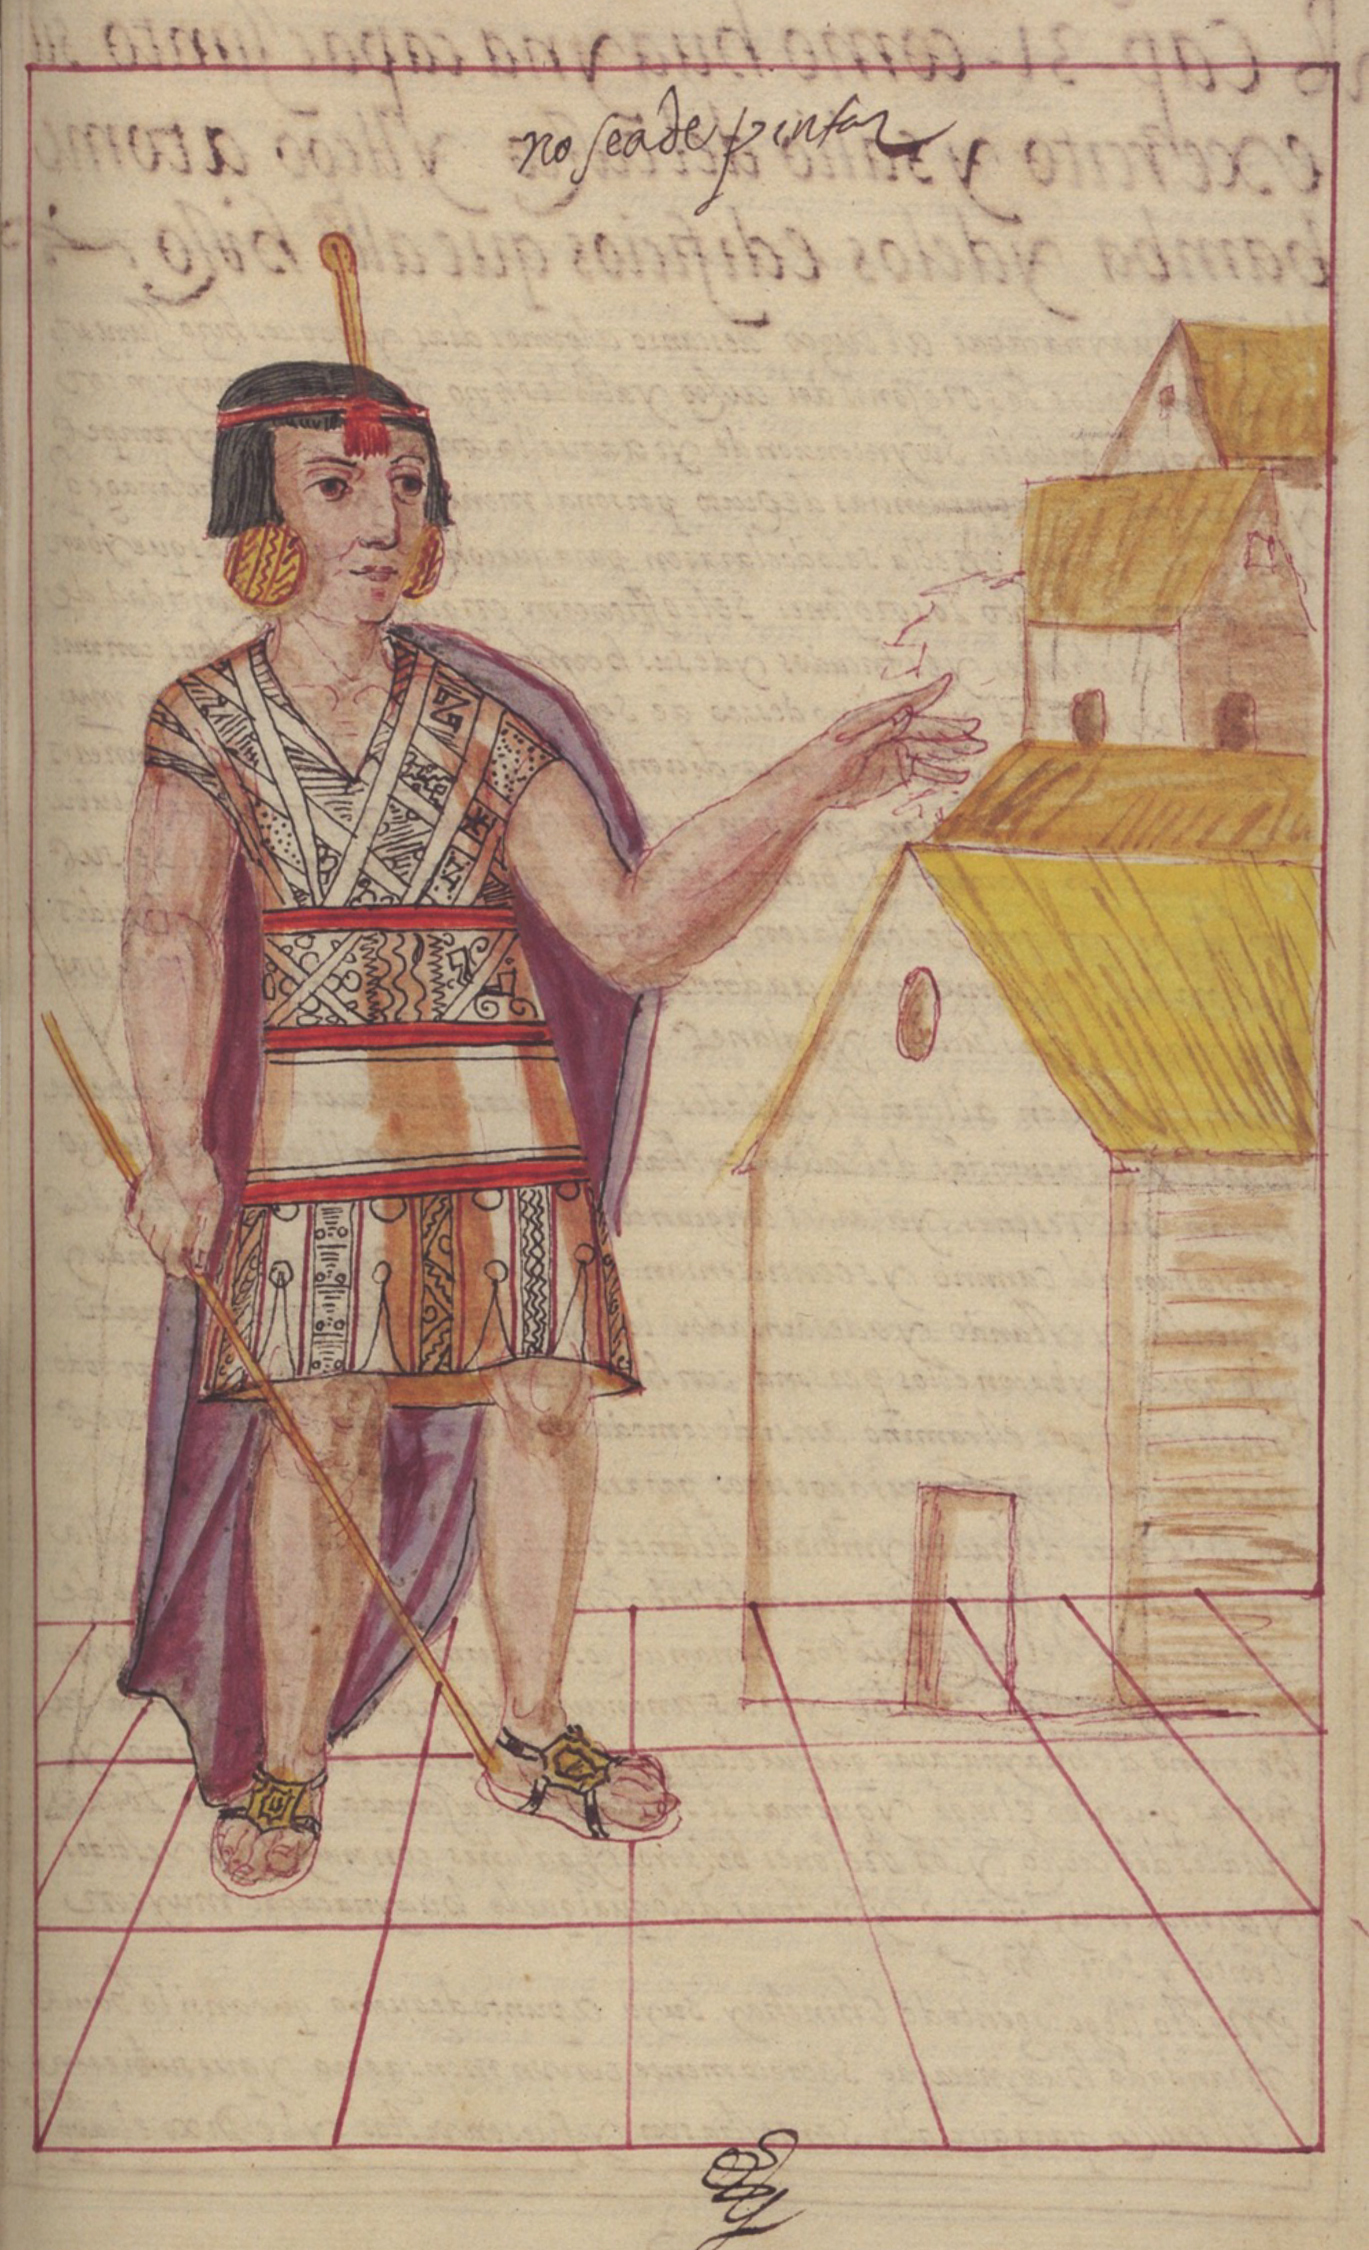 MS Ludwig XIII 16, General History of Peru, folio 62, Huayna Capac at Tumibamba, latest date 1616, La Plata, Bolivia, J. Paul Getty Museum, Los Angeles